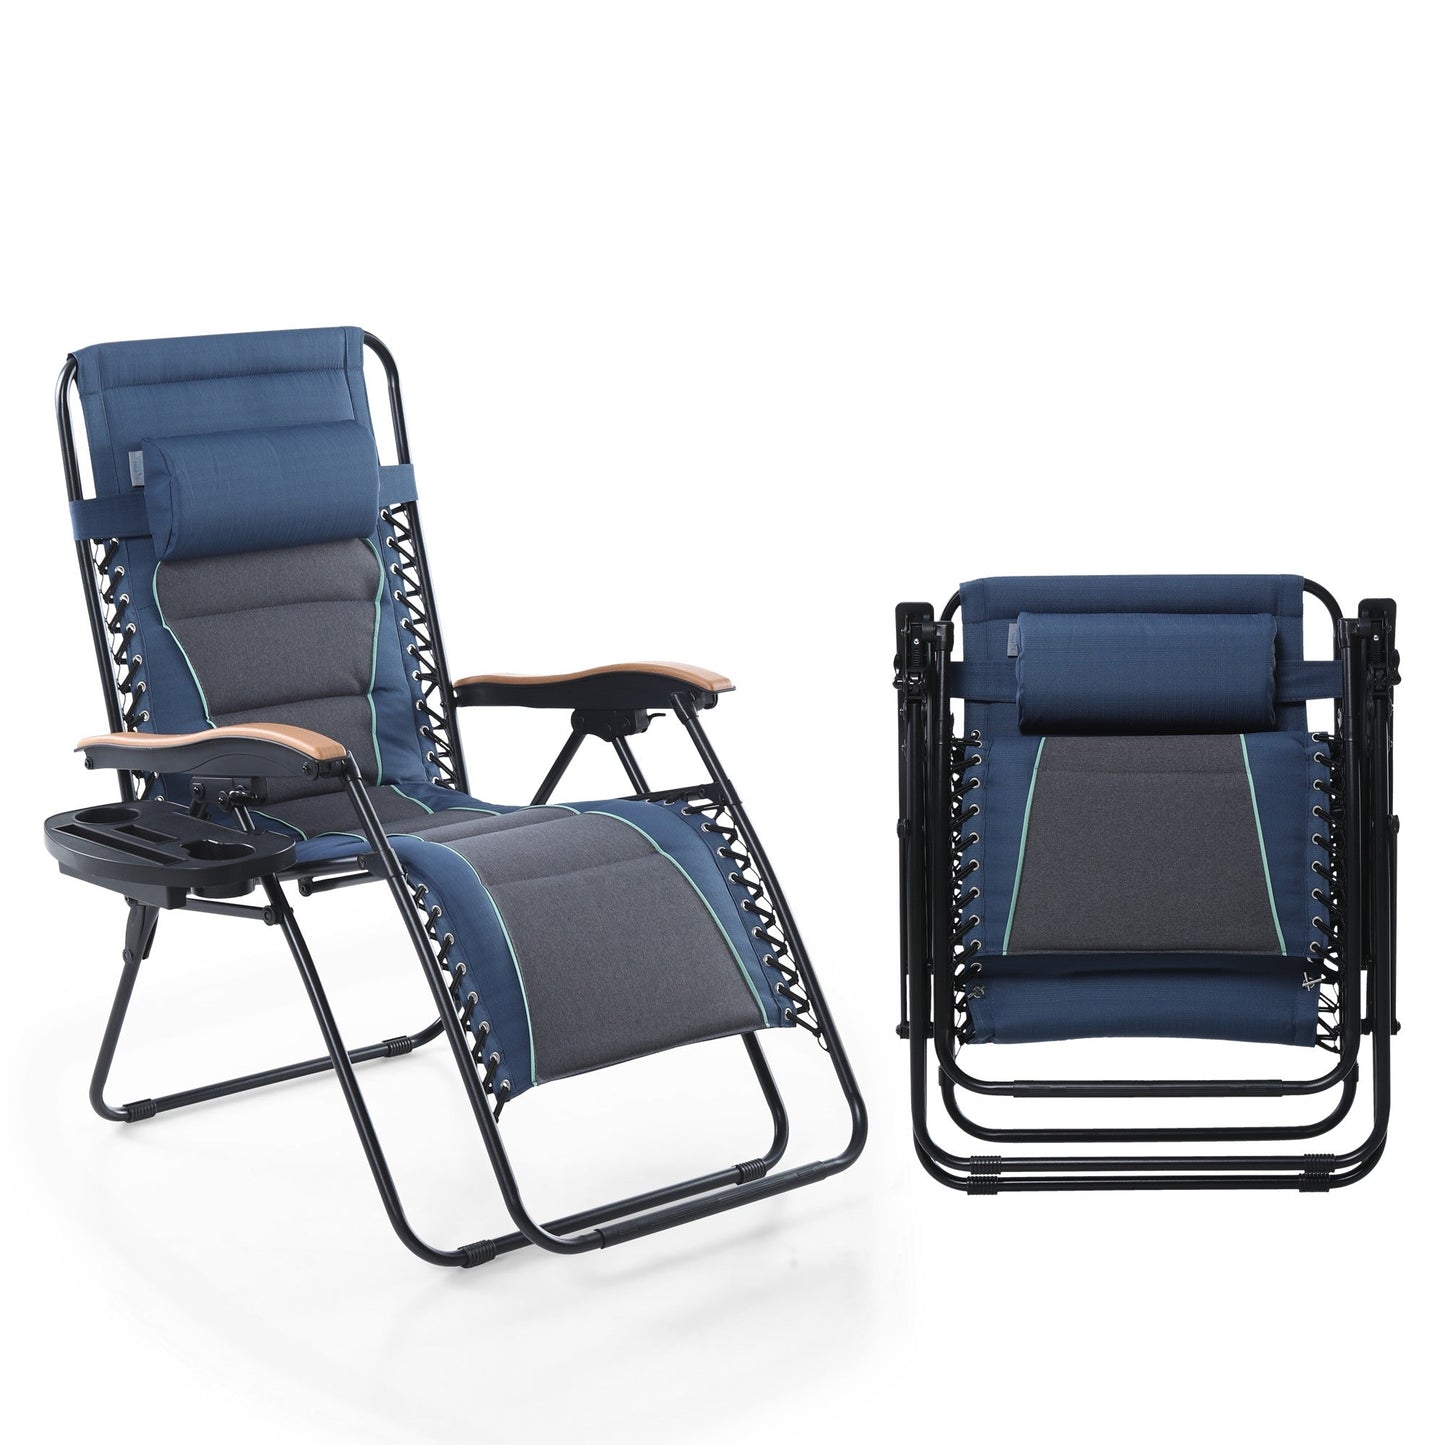 Sophia&William Oversized Outdoor Padded Zero Gravity Chairs Set of 2 - Blue and Dark Gray